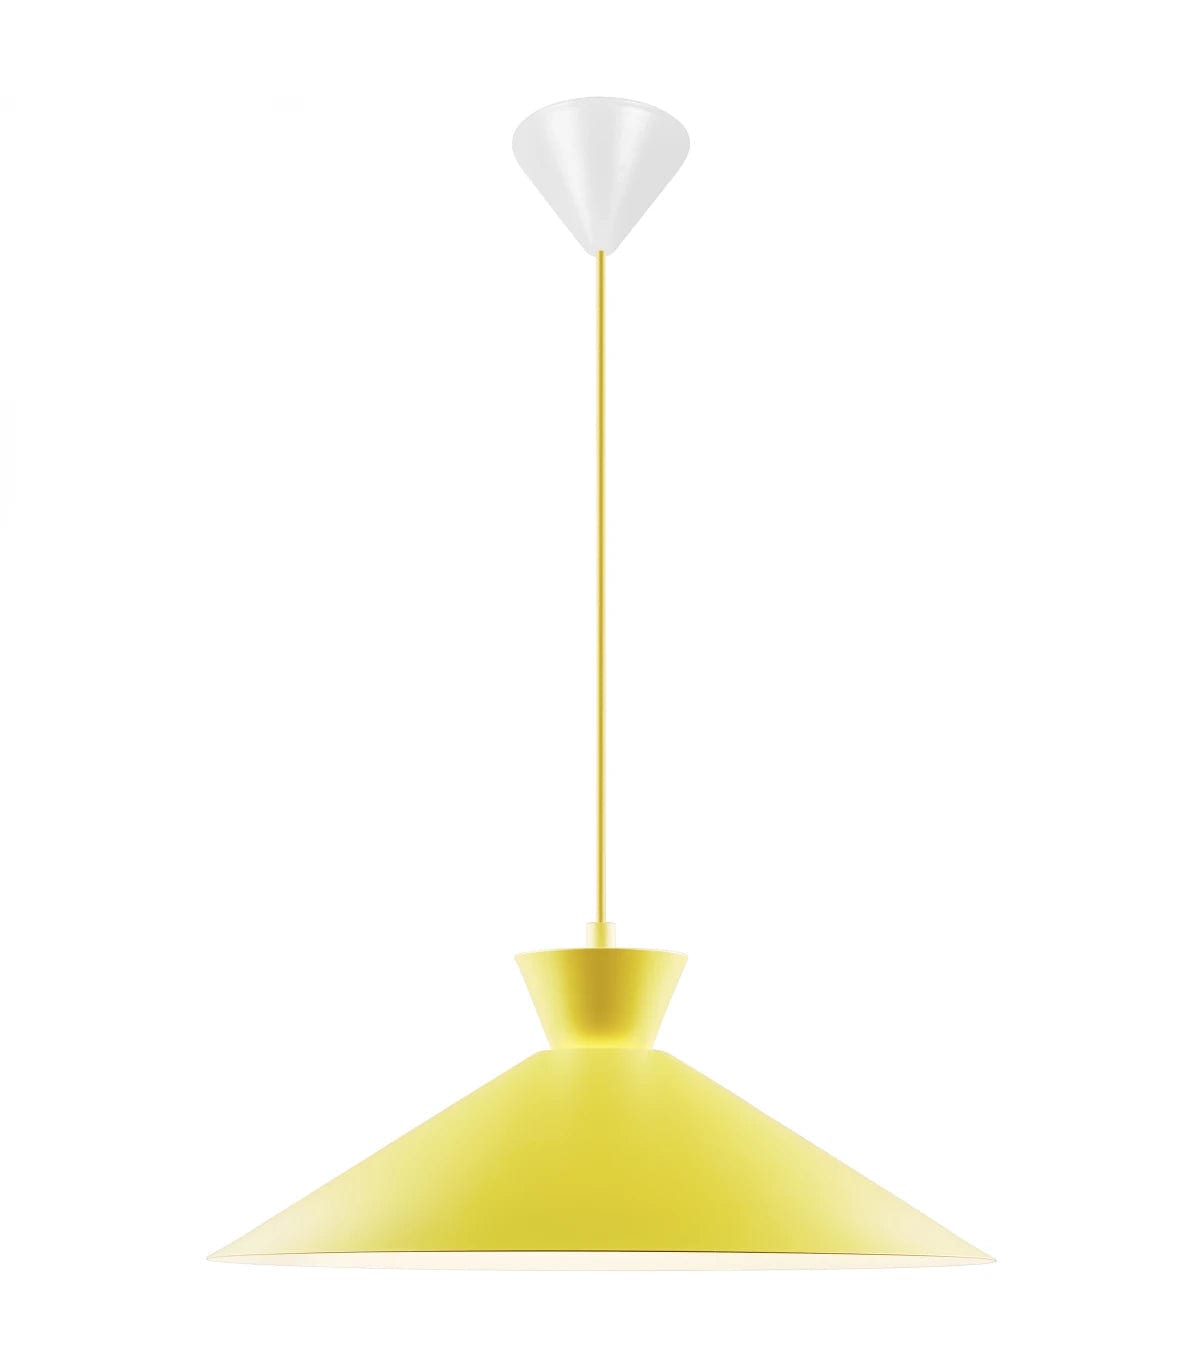 Lampa wisząca DIAL żółty Nordlux    Eye on Design